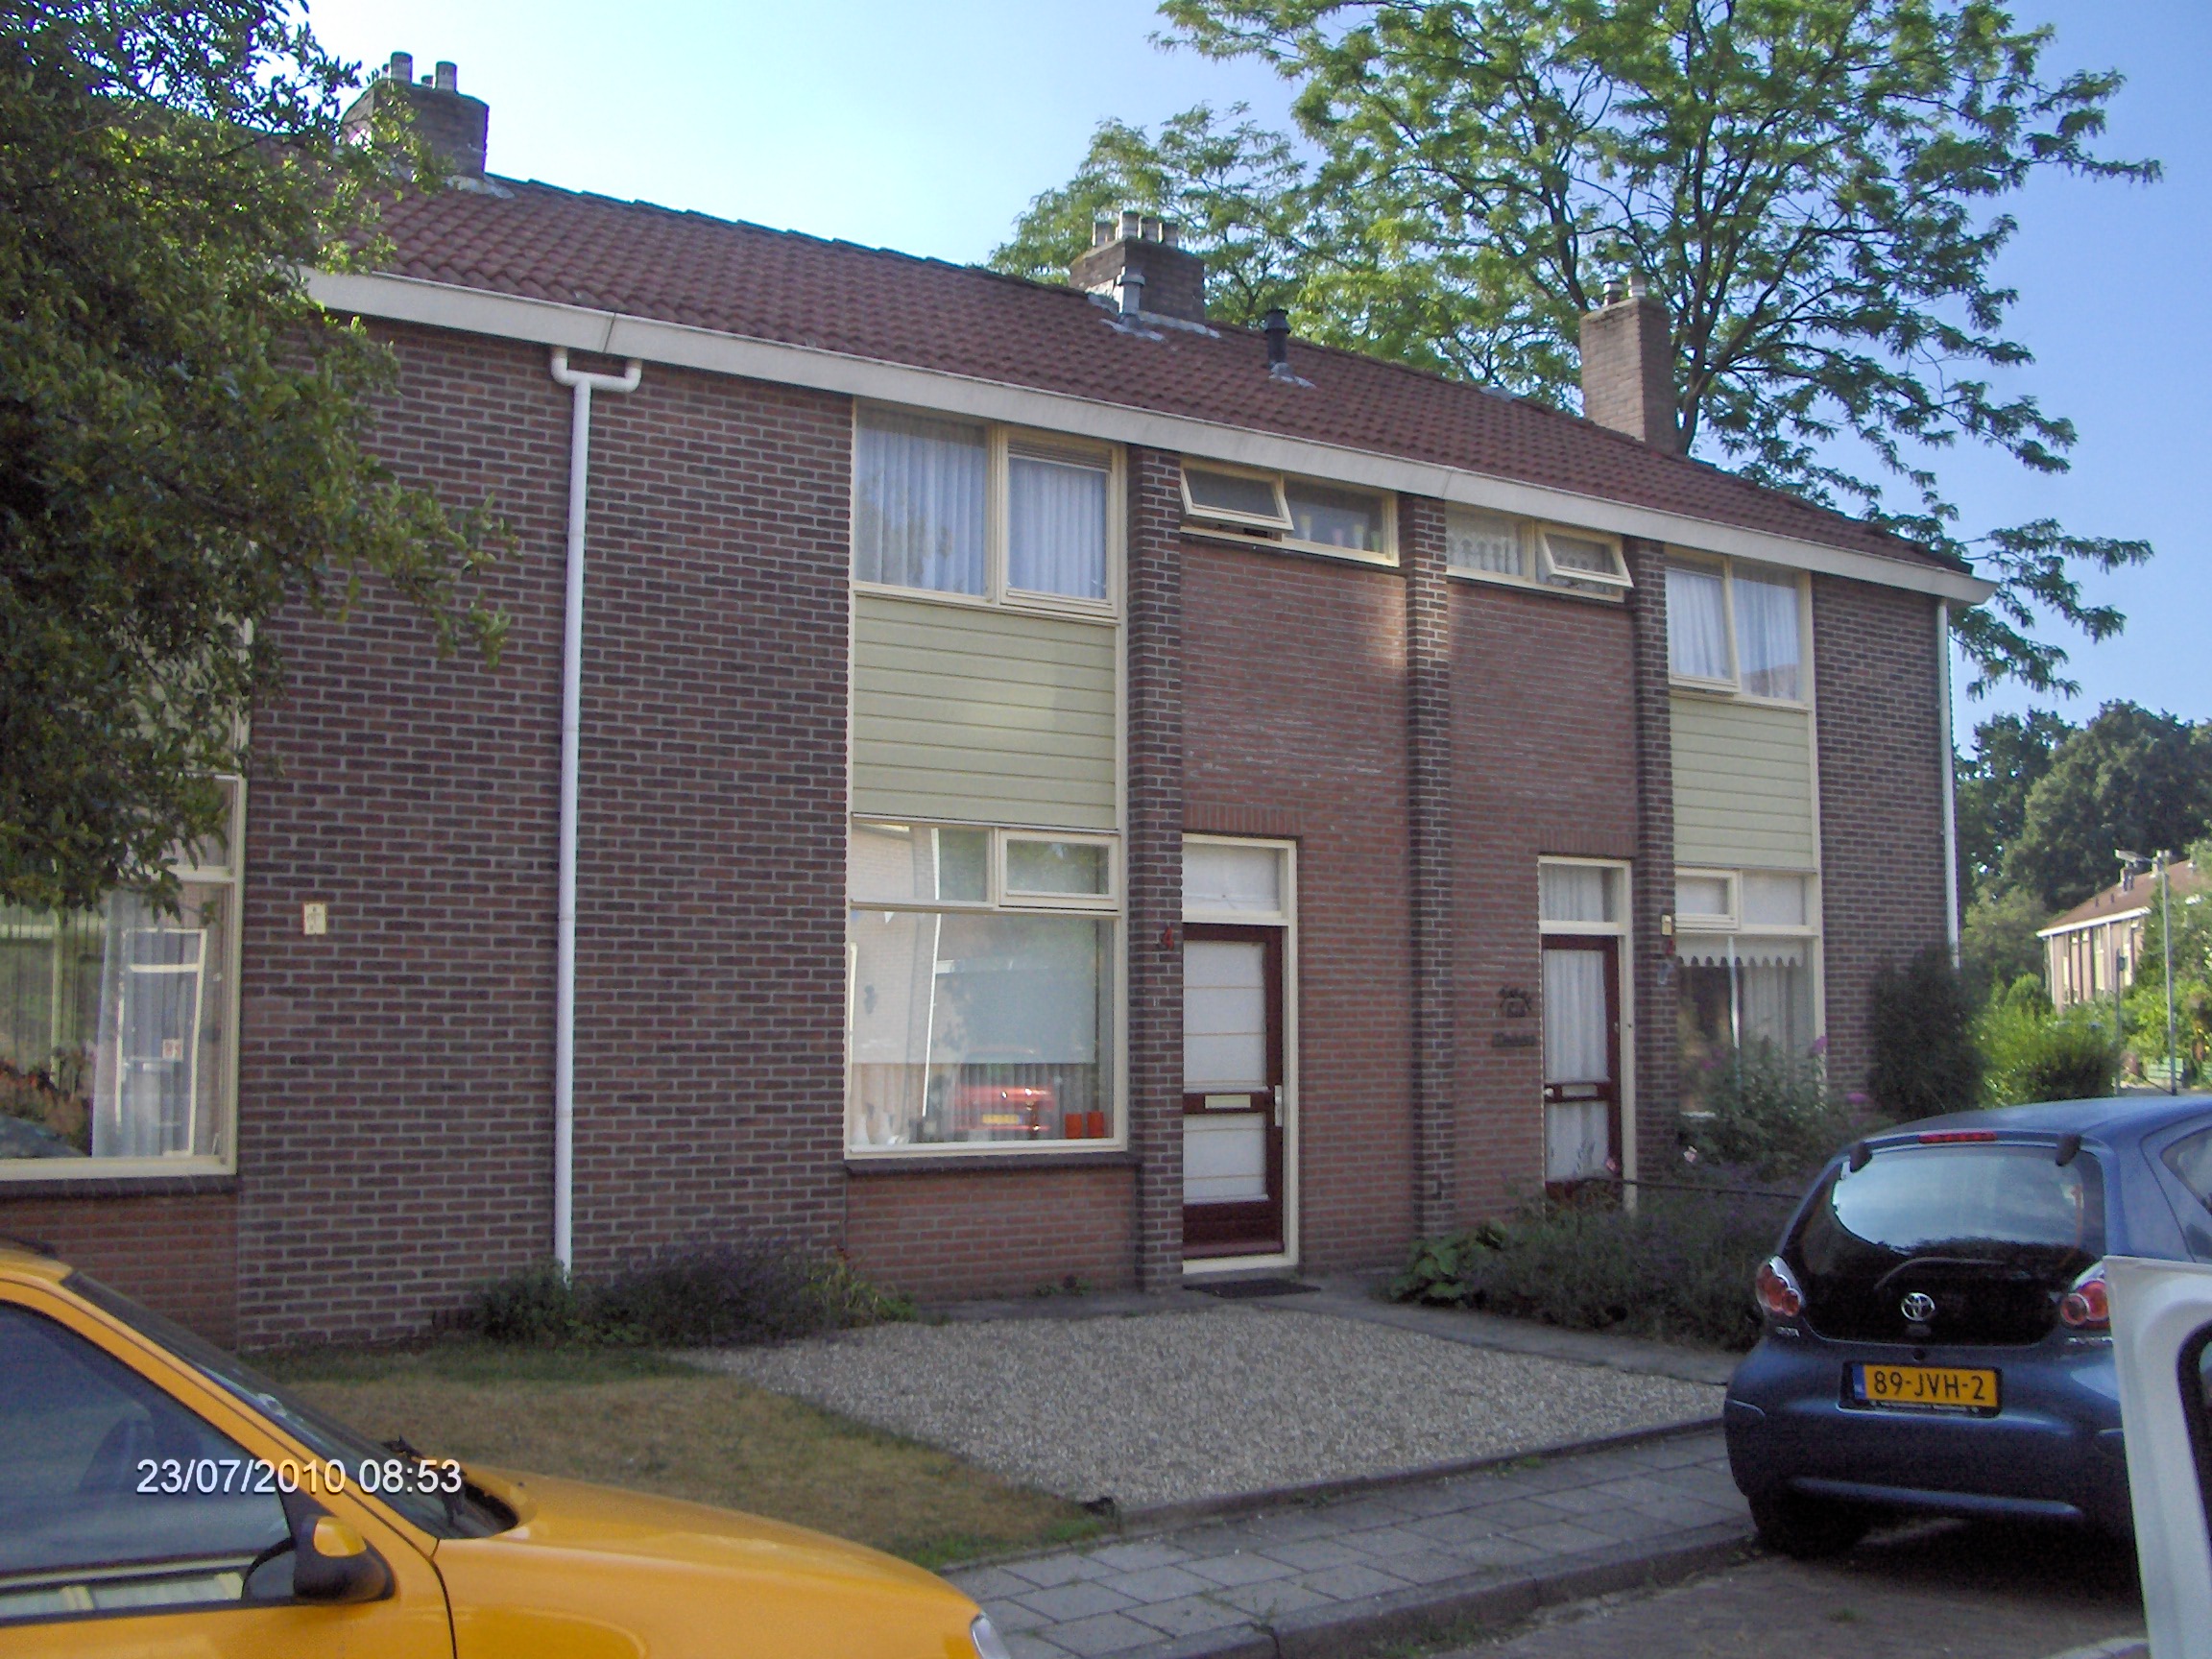 Doctor A.M. Dhontstraat 4, 7942 XW Meppel, Nederland